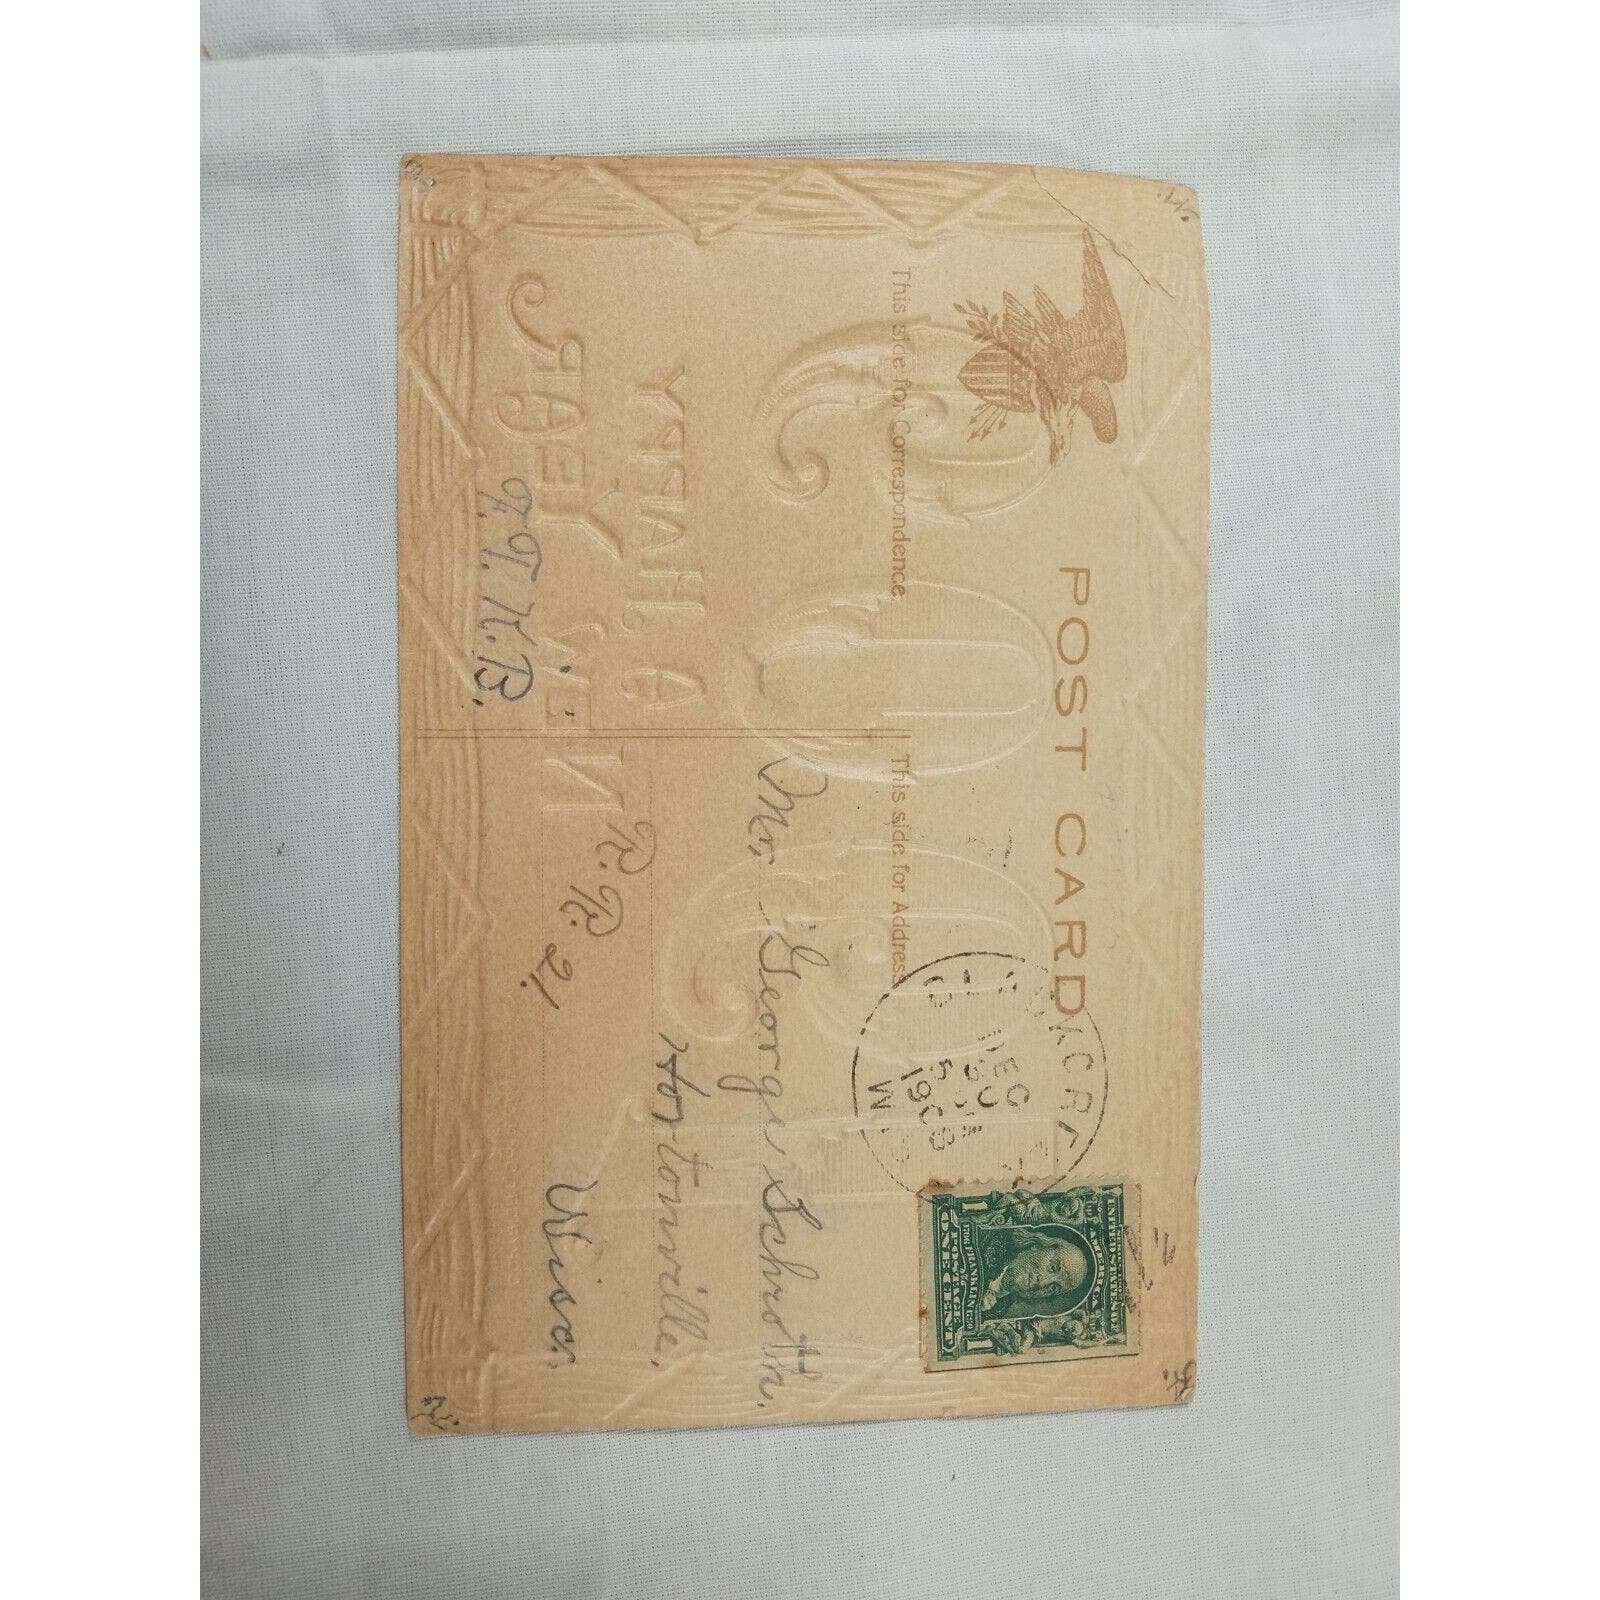 Antique VTG 1908 POSTCARD with BENJAMIN FRANKLIN 1 Cent Green Stamp 1902 - 1910 cMc4yeRvd